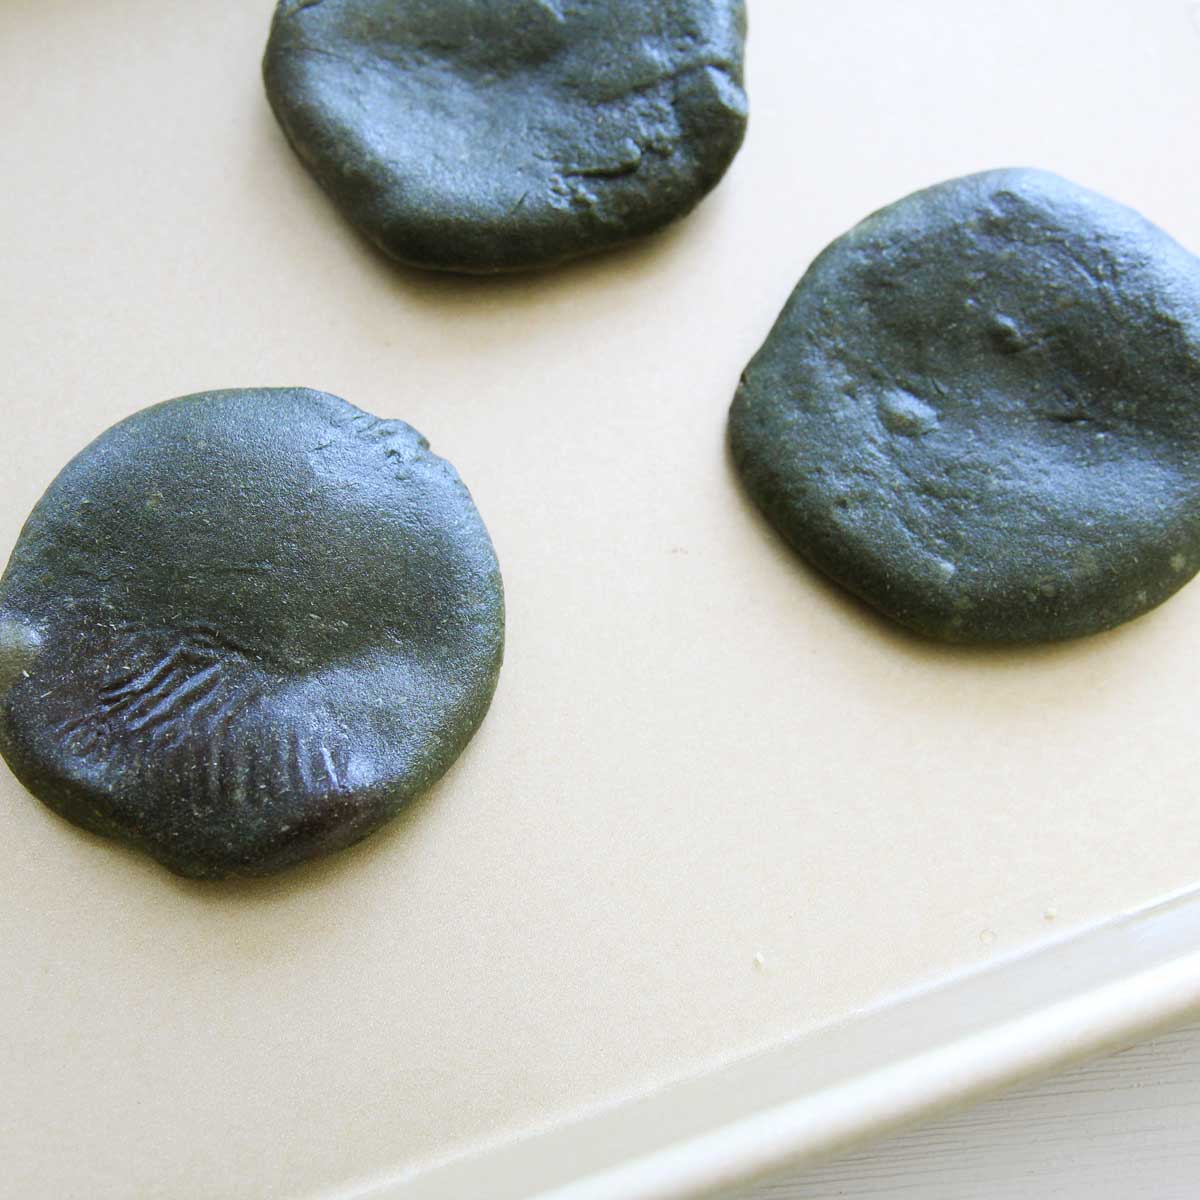 How to Make Mugwort Mochi Pancakes (Stuffed with Red Bean Paste) - mugwort mochi pancakes